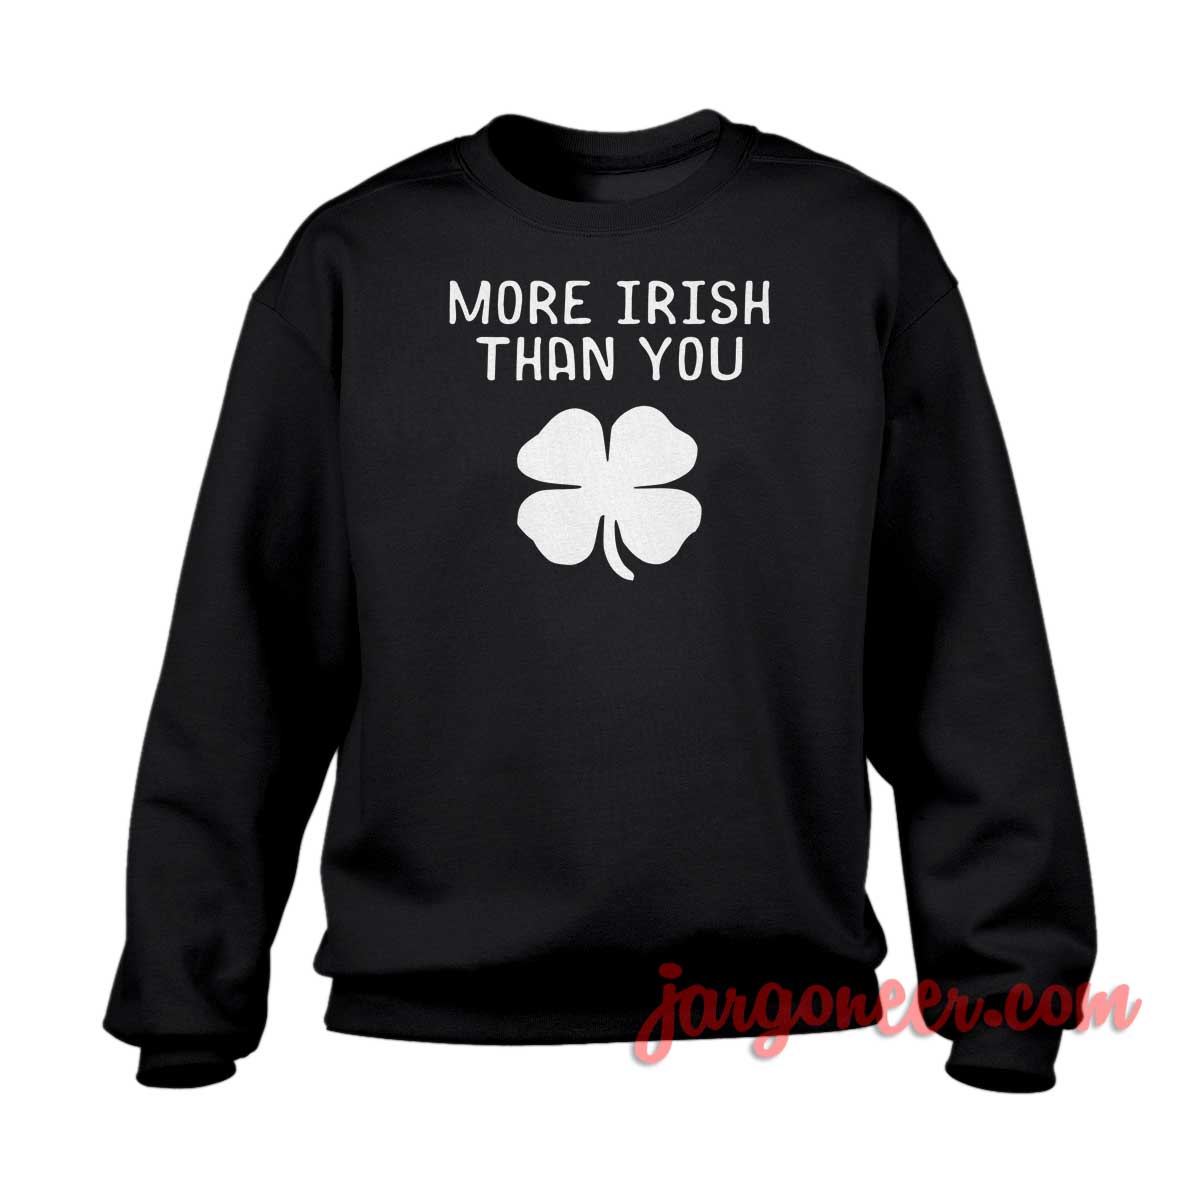 More Irish Than You 1 - Shop Unique Graphic Cool Shirt Designs